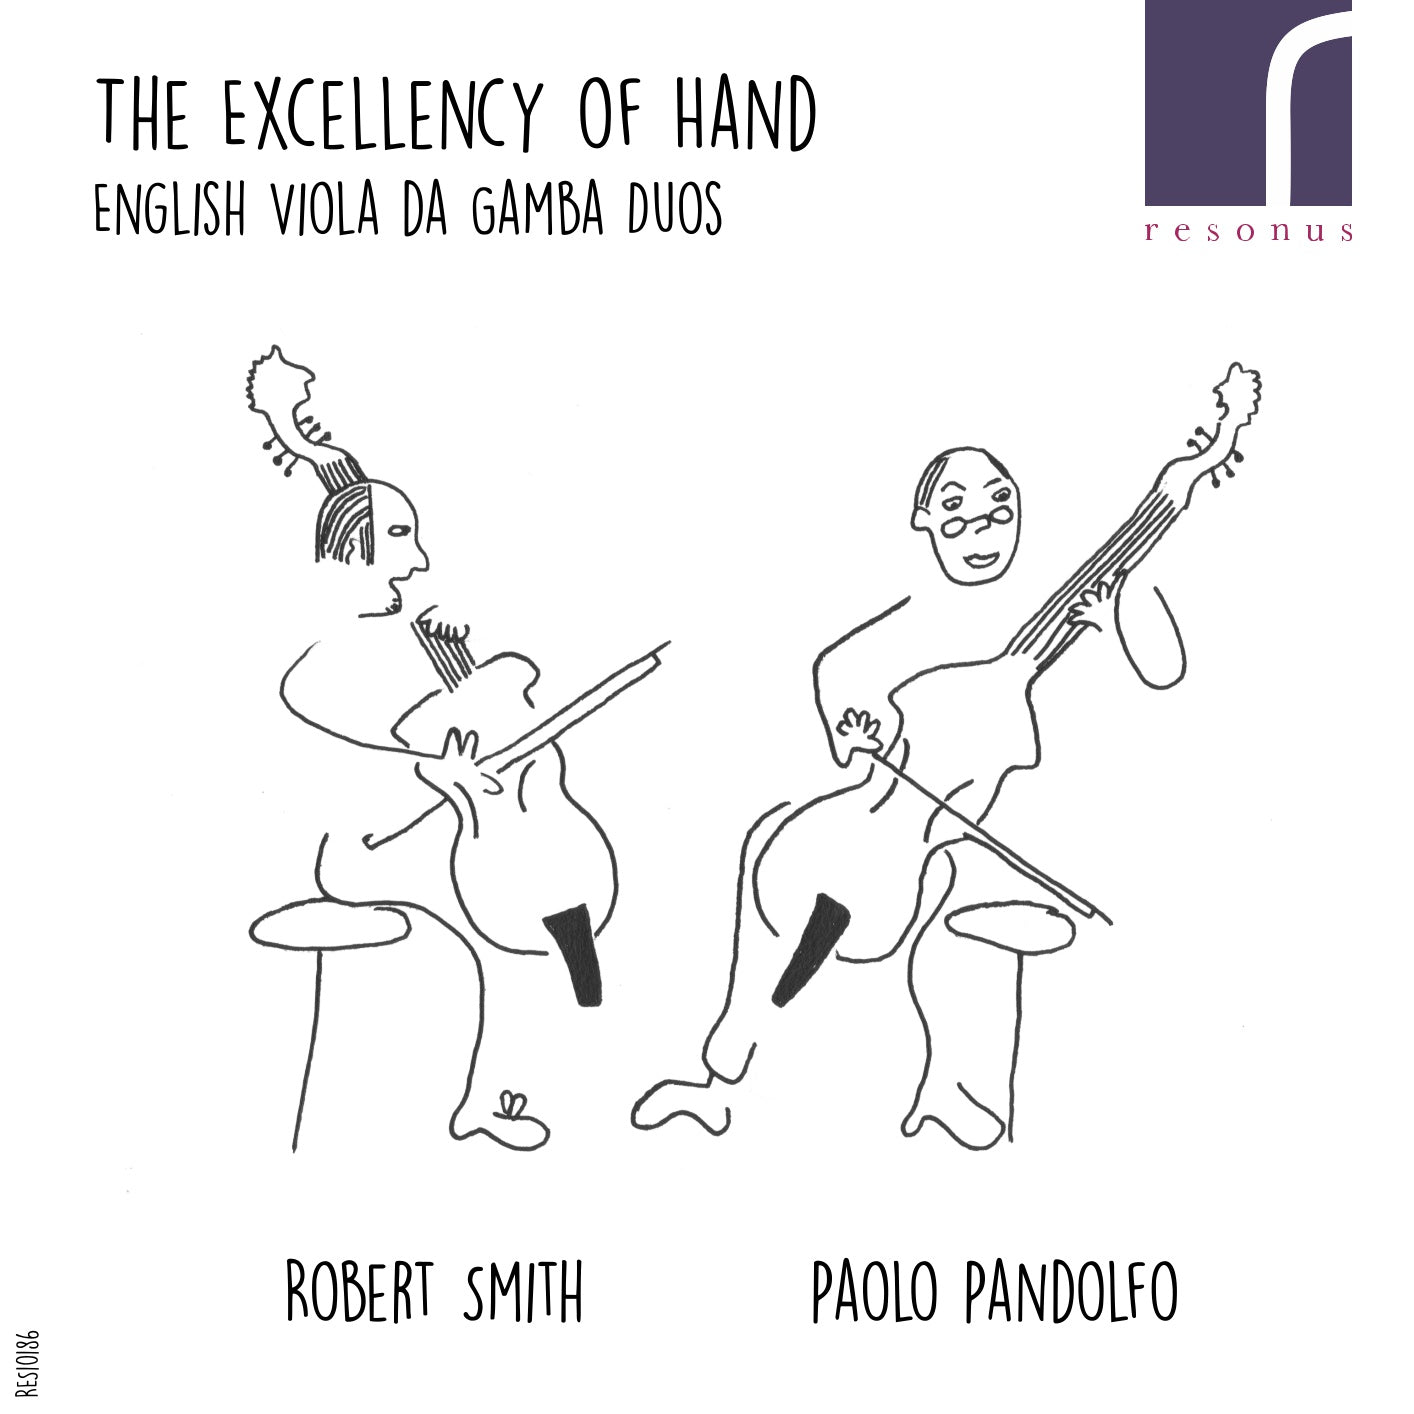 The Excellency of Hand: English Viola da Gamba Duos